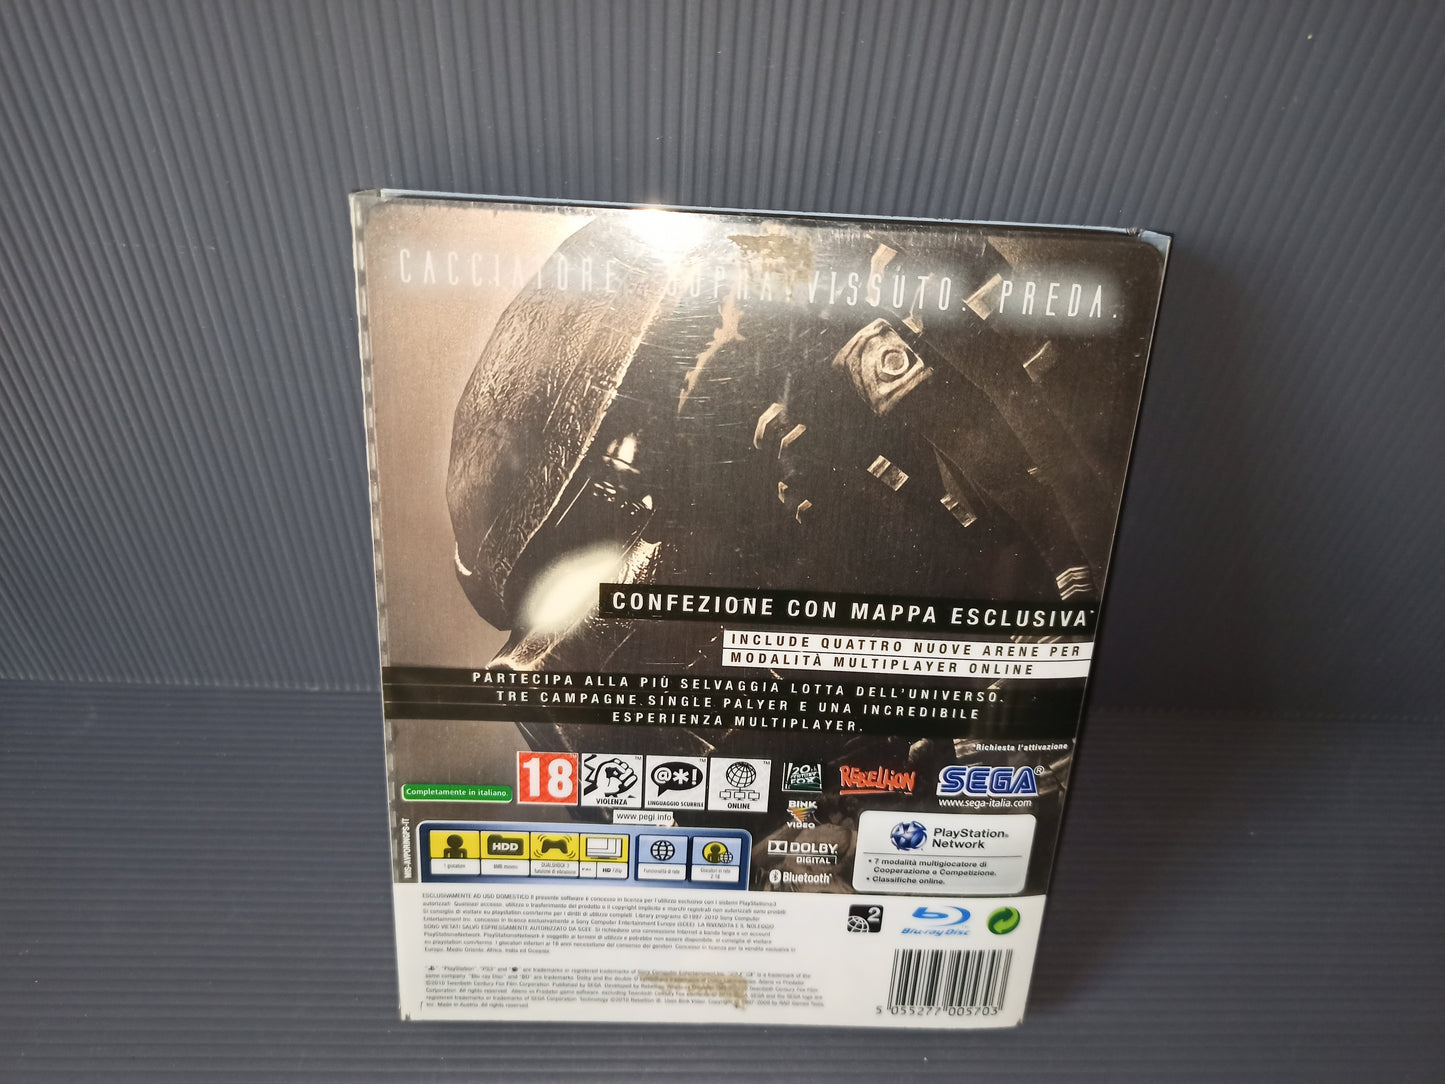 Alien vs Predator steelbook video game for PS3